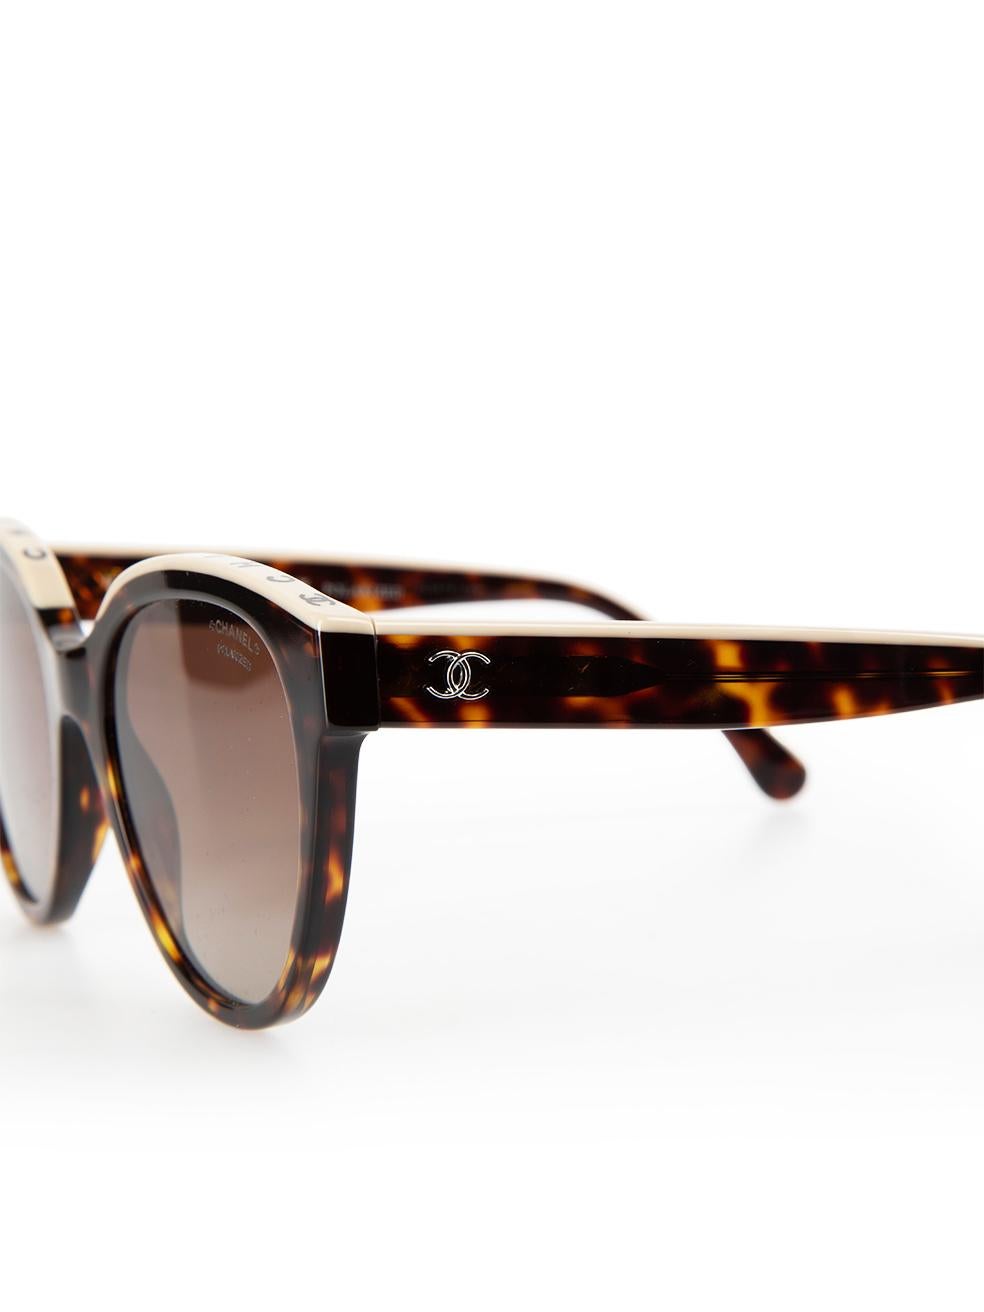 Chanel Dark Tortoise Butterfly Sunglasses For Sale 2